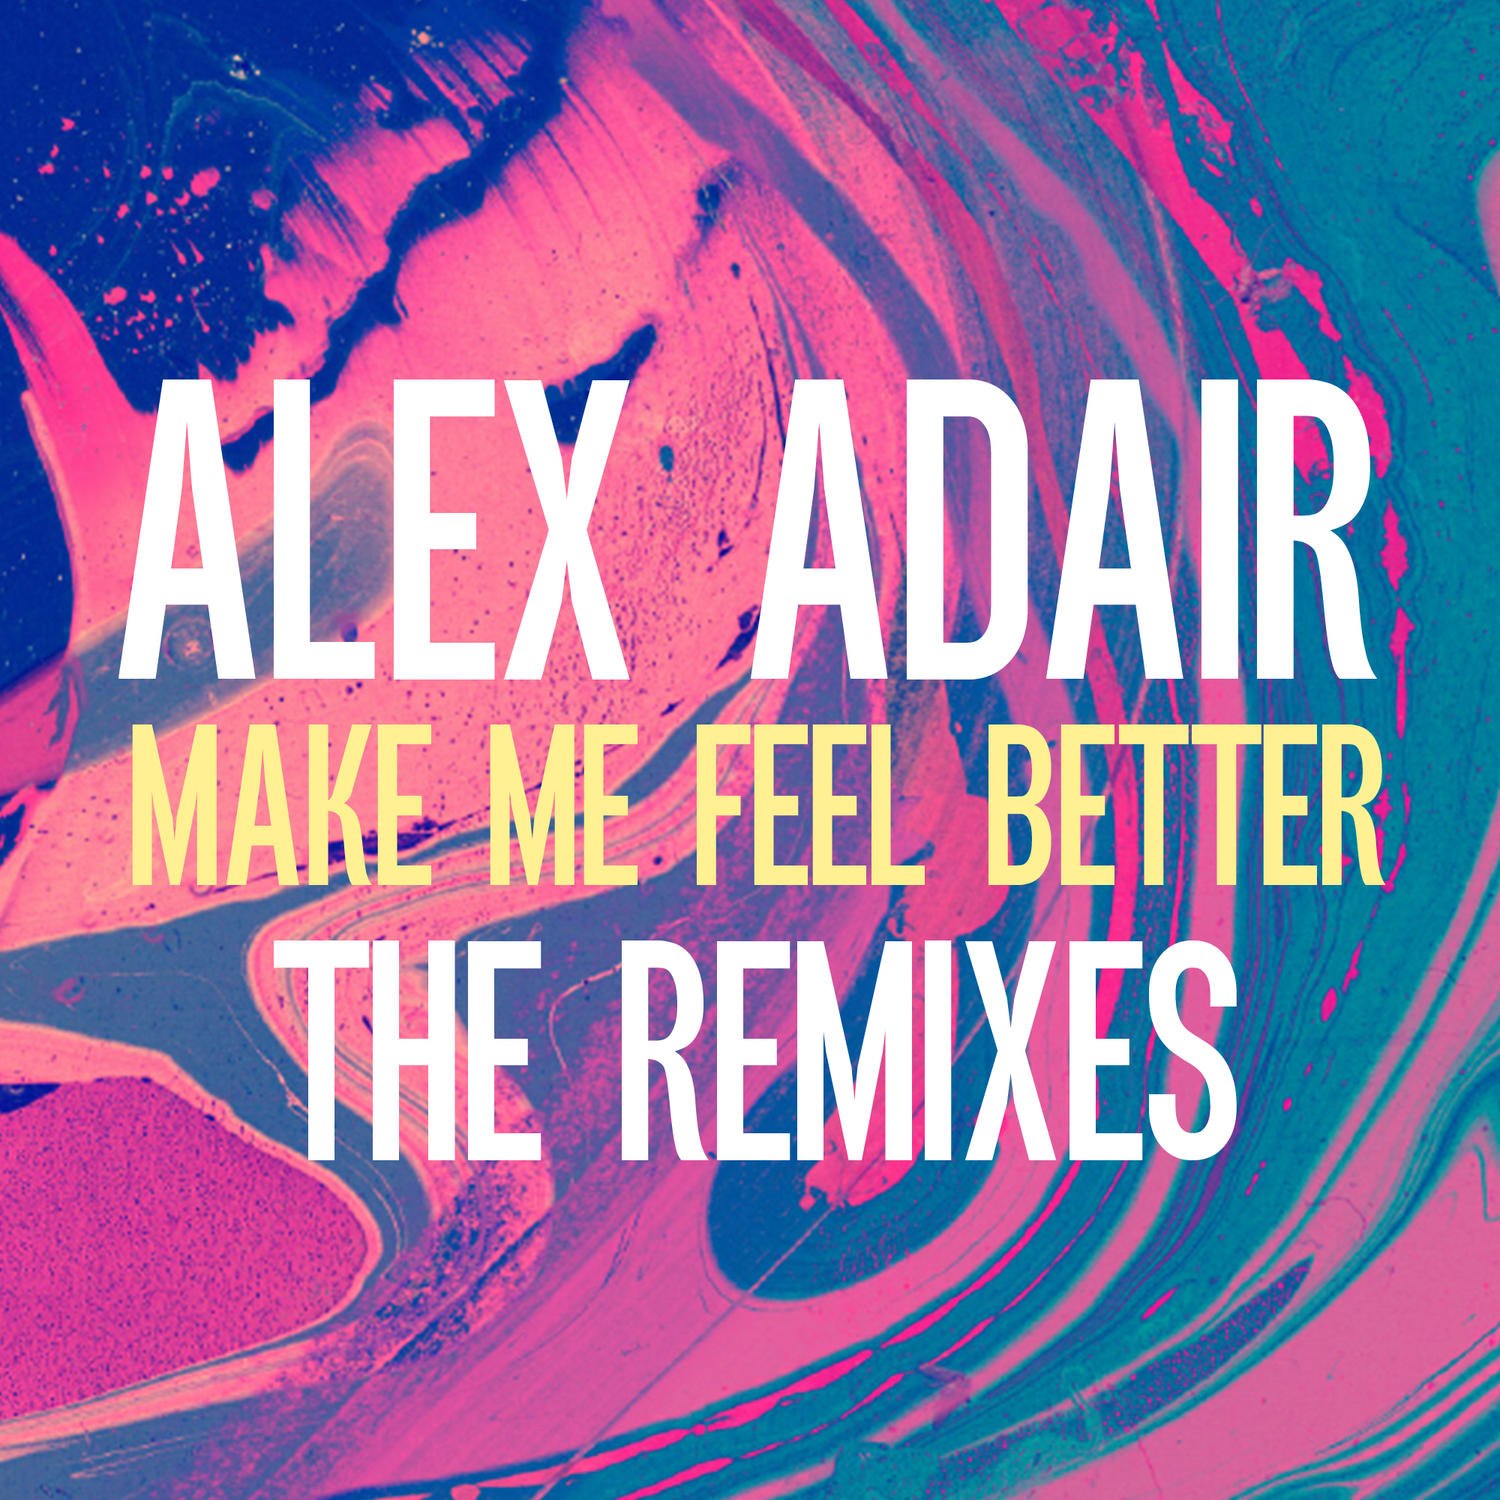 Takes me feel better. Alex Adair - make. Alex Adair make me feel better. Make me feel better Александер Адаир. Make me feel.